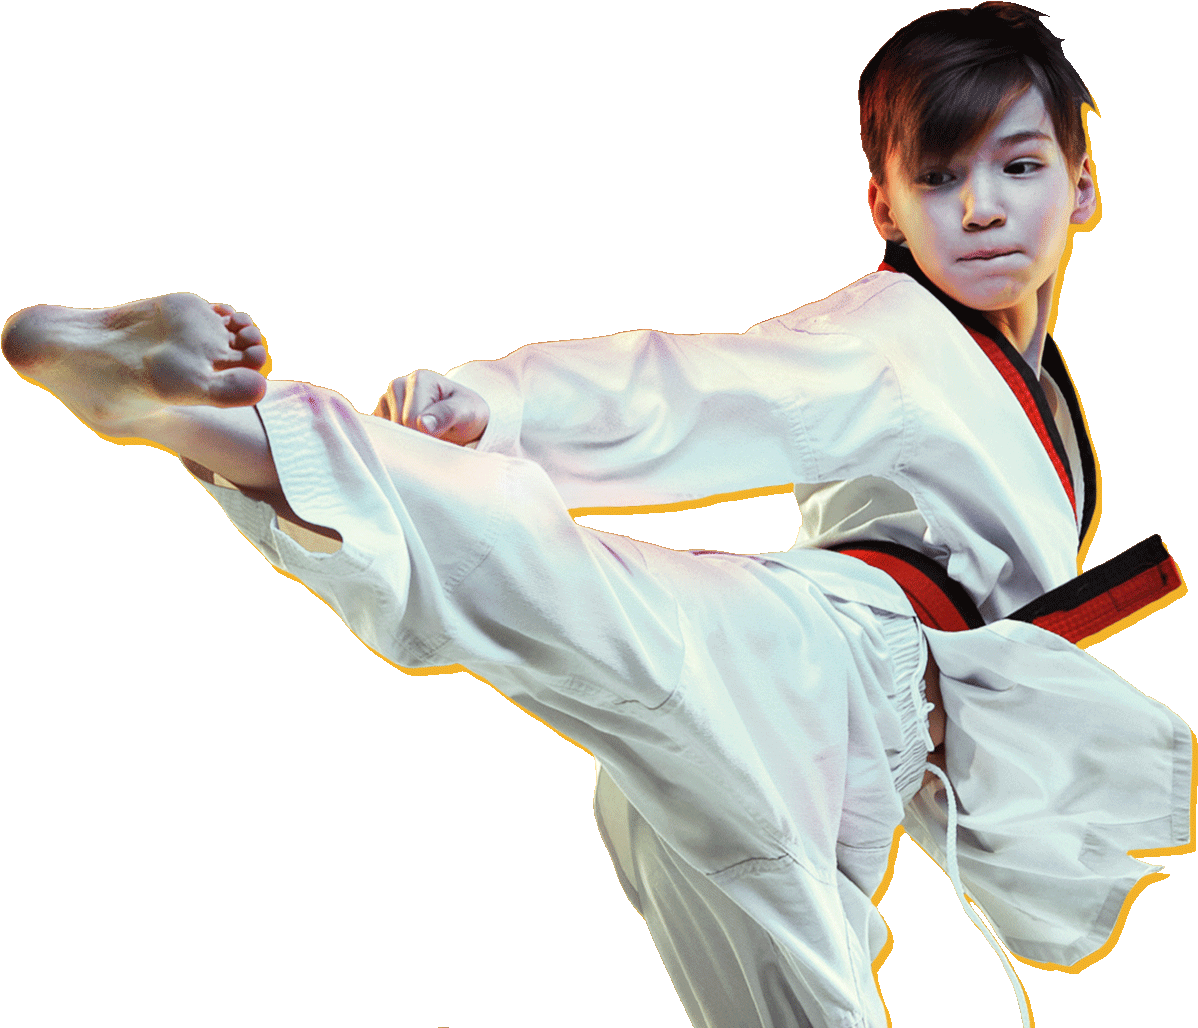 A Boy In A Karate Uniform